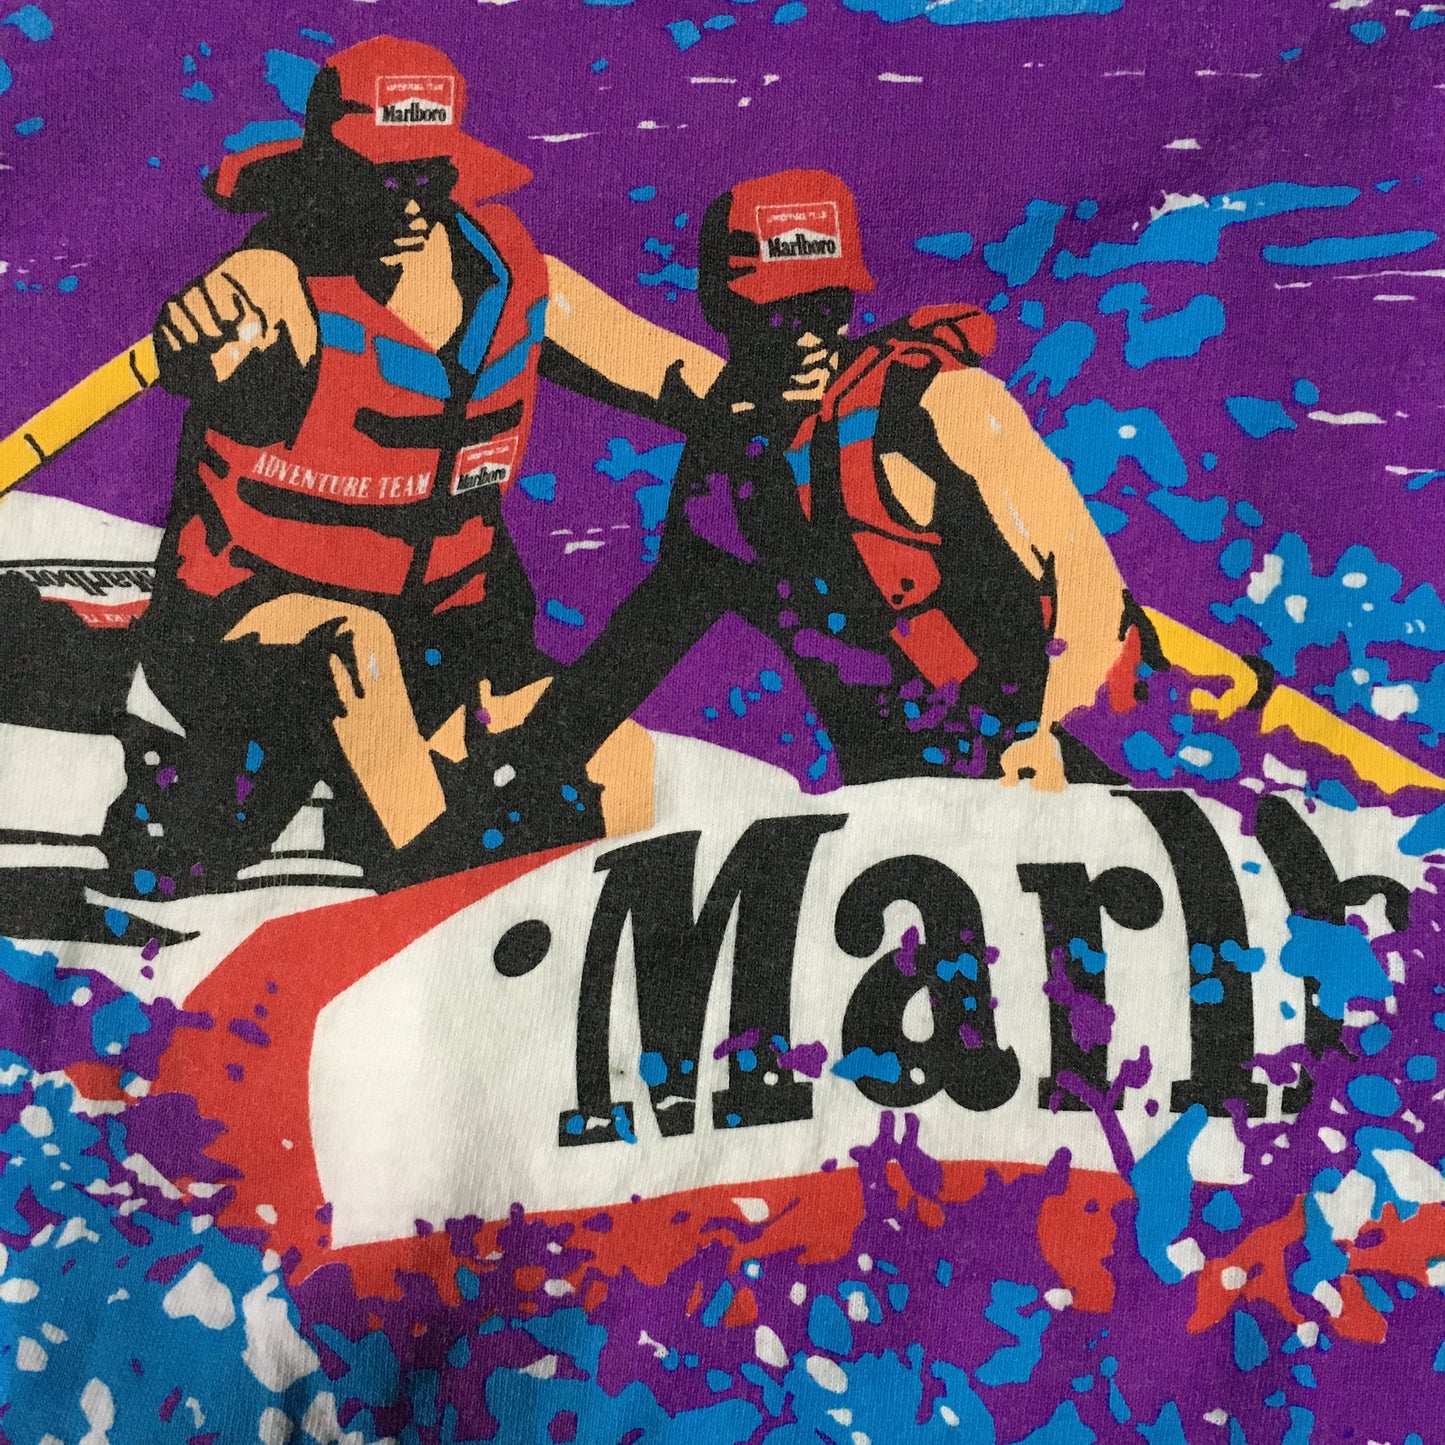 Marlboro "Adventure Team" Shirt - XL